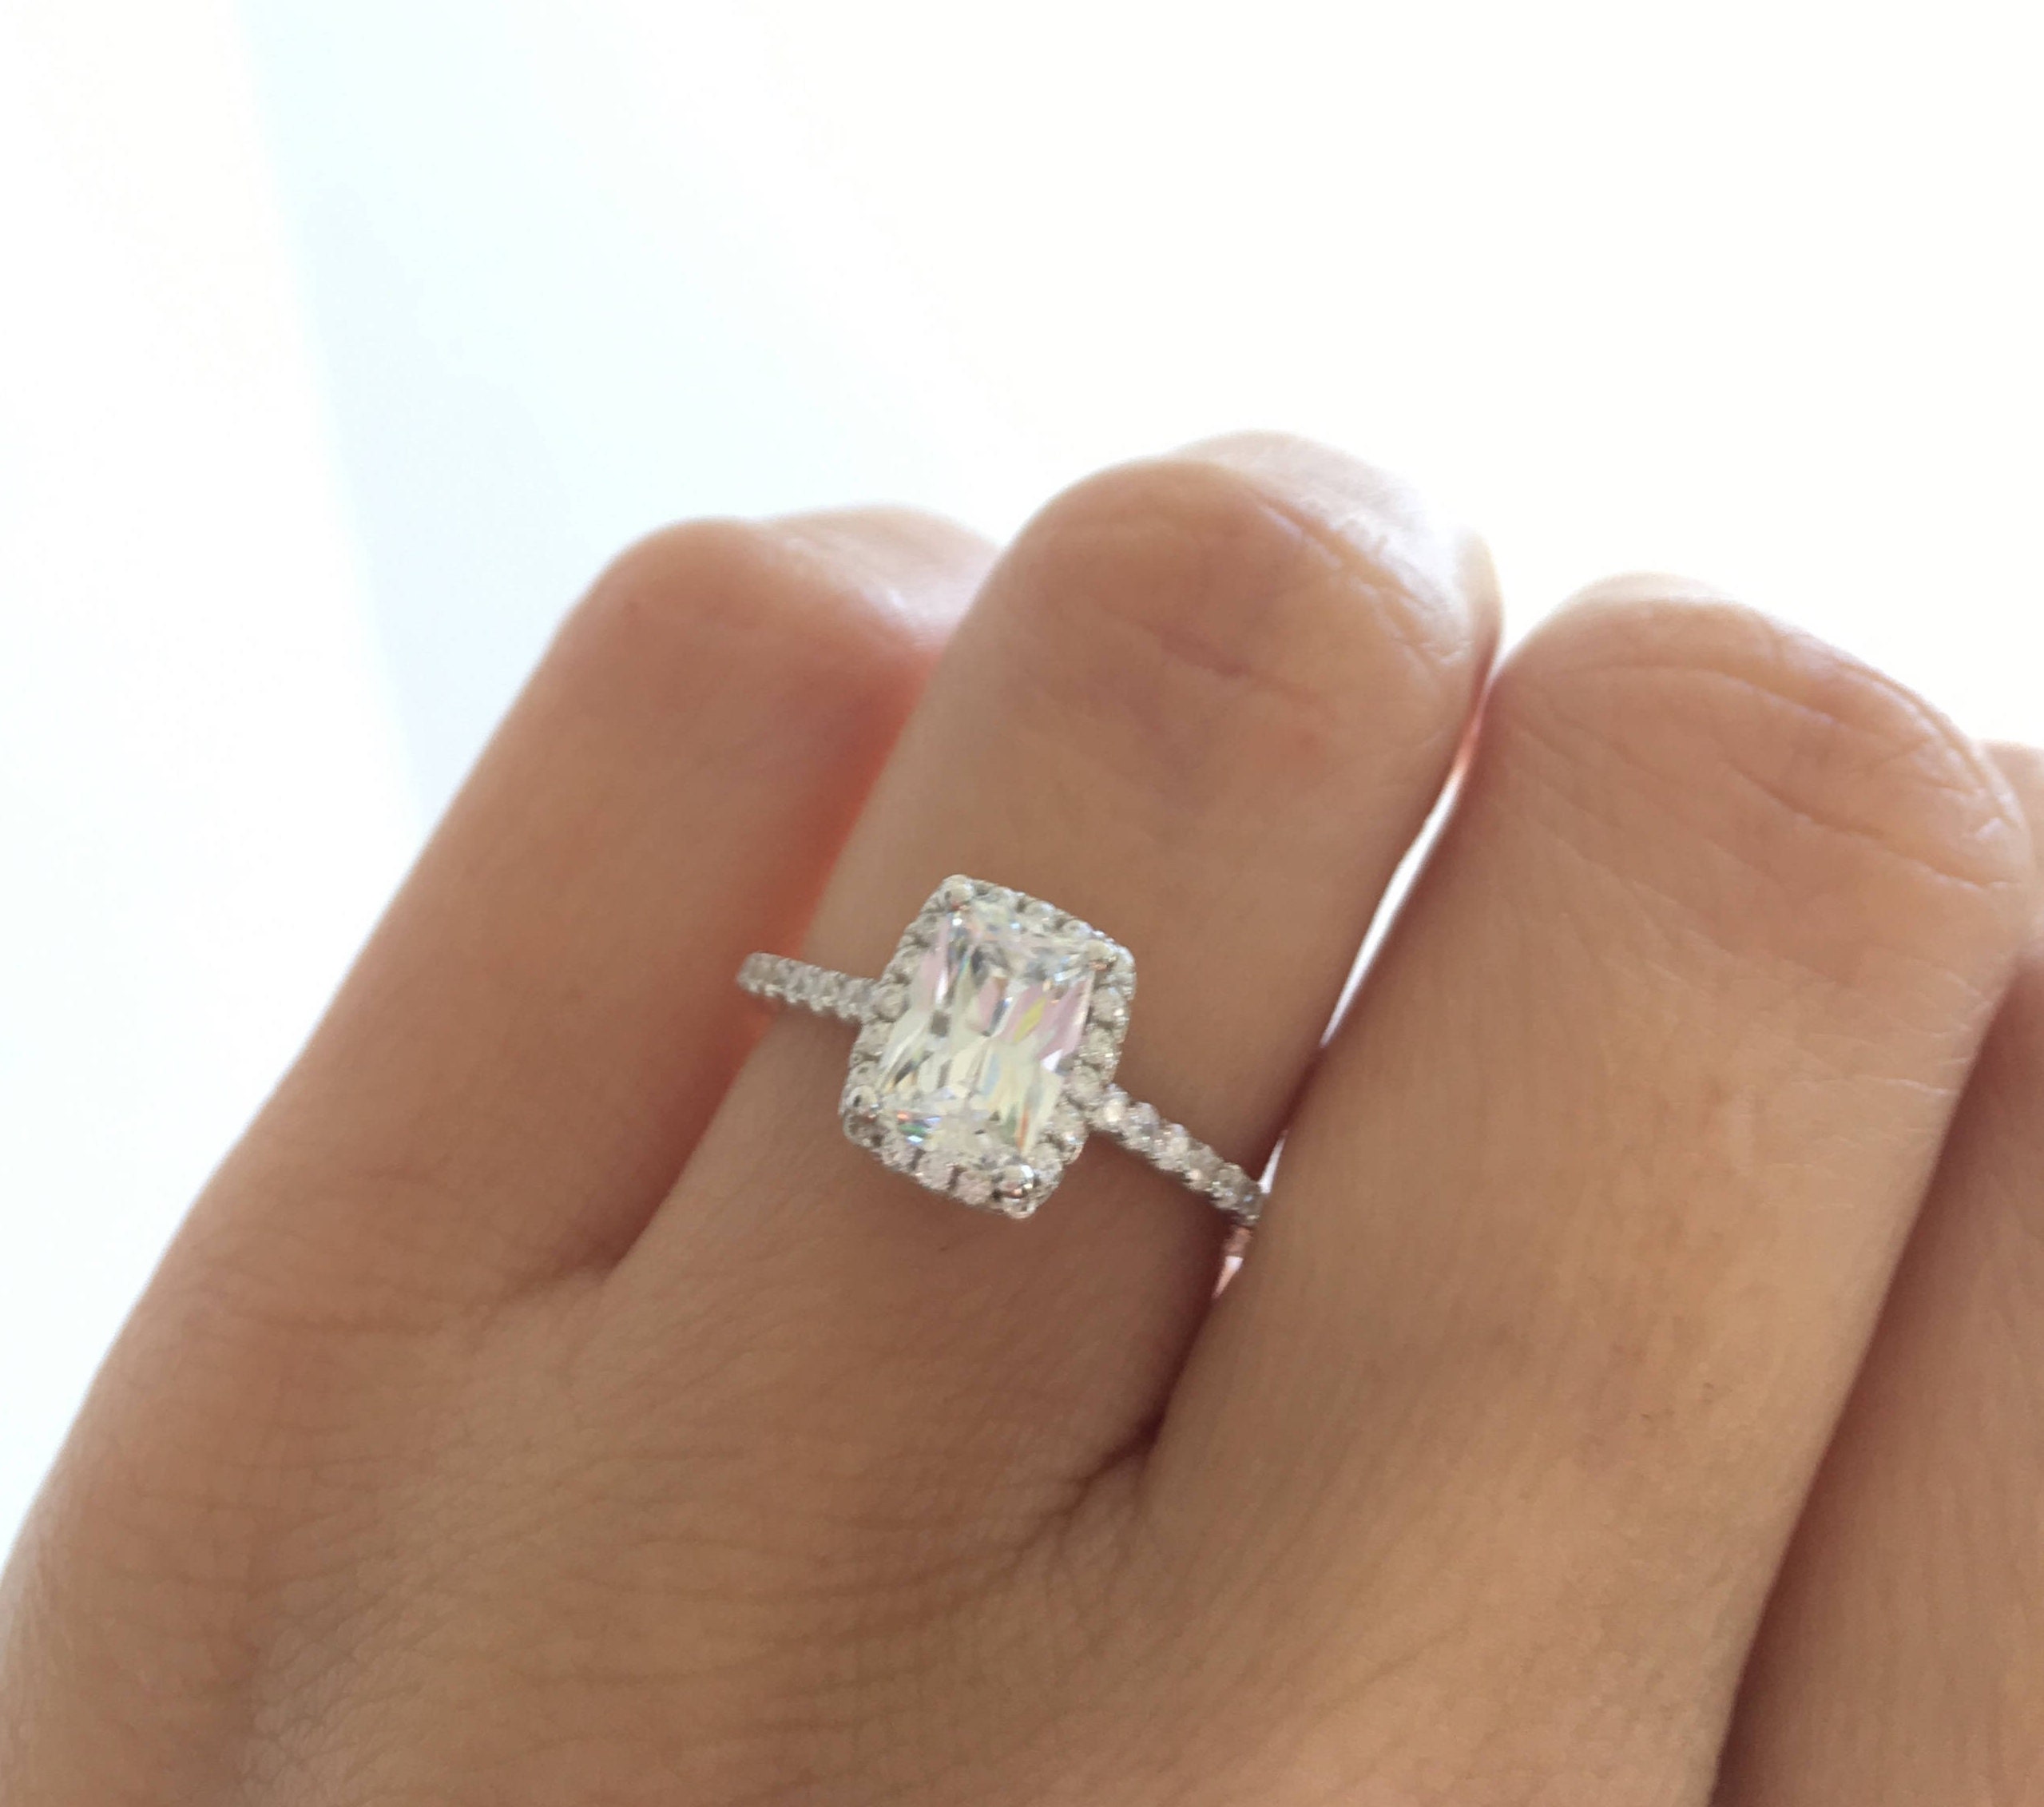 Swarovski-Crystal-Engagement-Ring-White-Gold-Plated-925 - Mishra Handicraft  at Rs 2280, Jaipur | ID: 10484233191